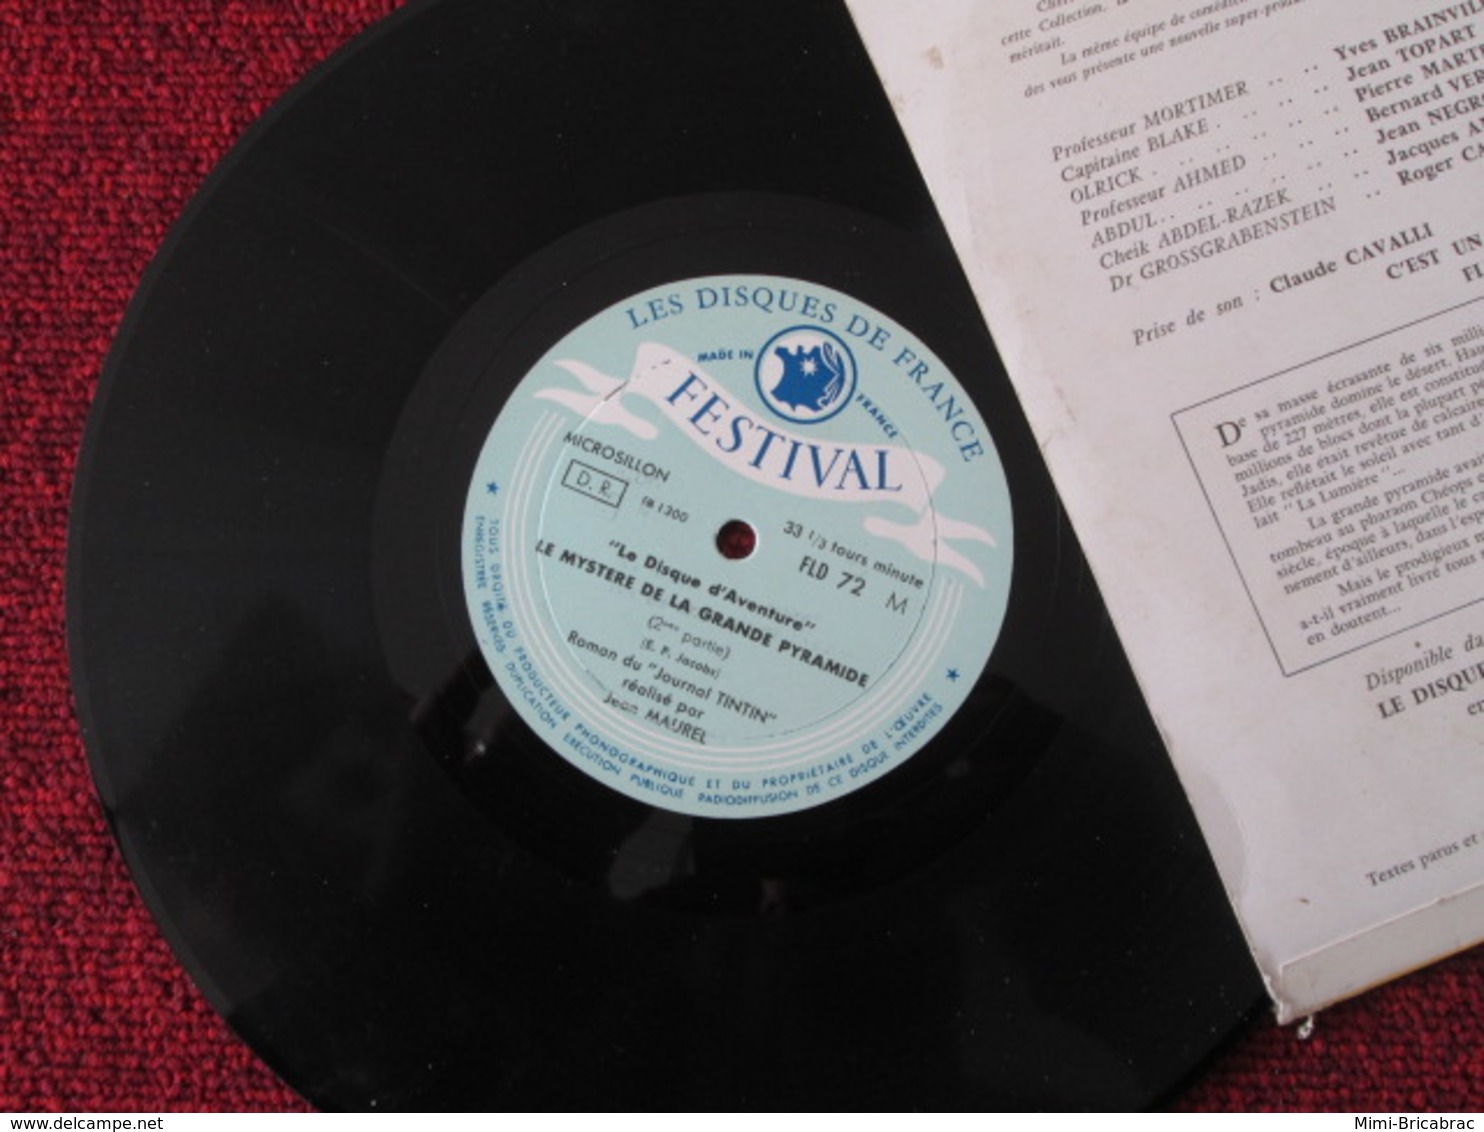 BACPLASTCAV Disque BANDES DESSINEE ANNEES 50/60 LE MYSTERE DE LA GRANDE PYRAMIDE 33T 25cm - Records